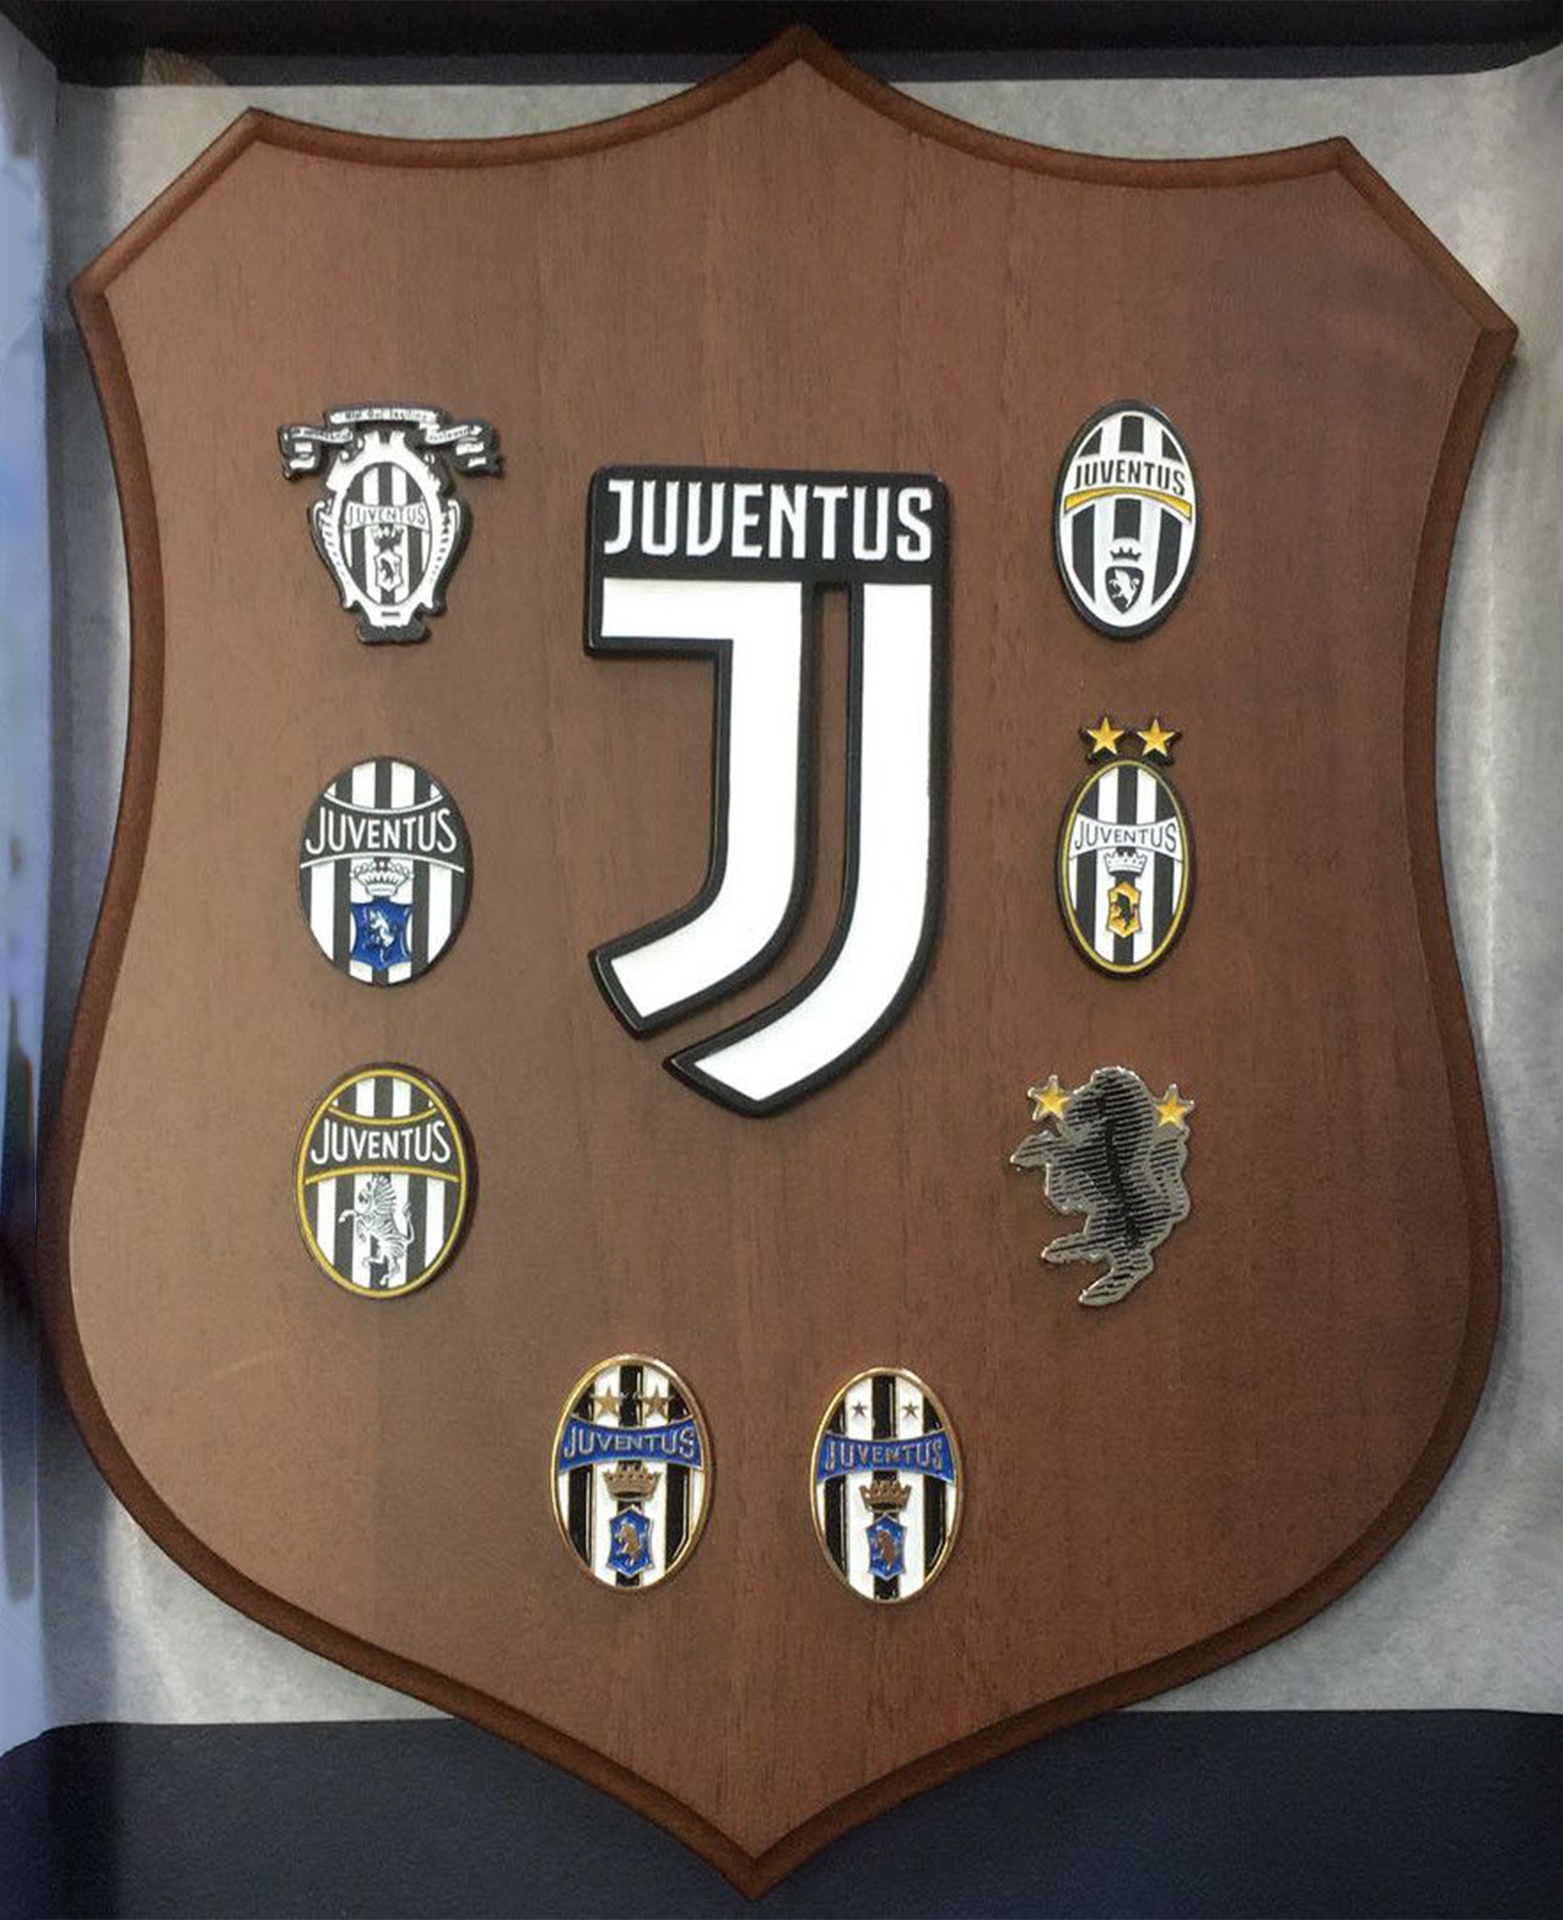 https://www.tastshirt.it/wp-content/uploads/2020/11/CREST-ARALDICO-art.-JU1305-Logo-ufficiale-e-marchi-storici-Juventus.jpg